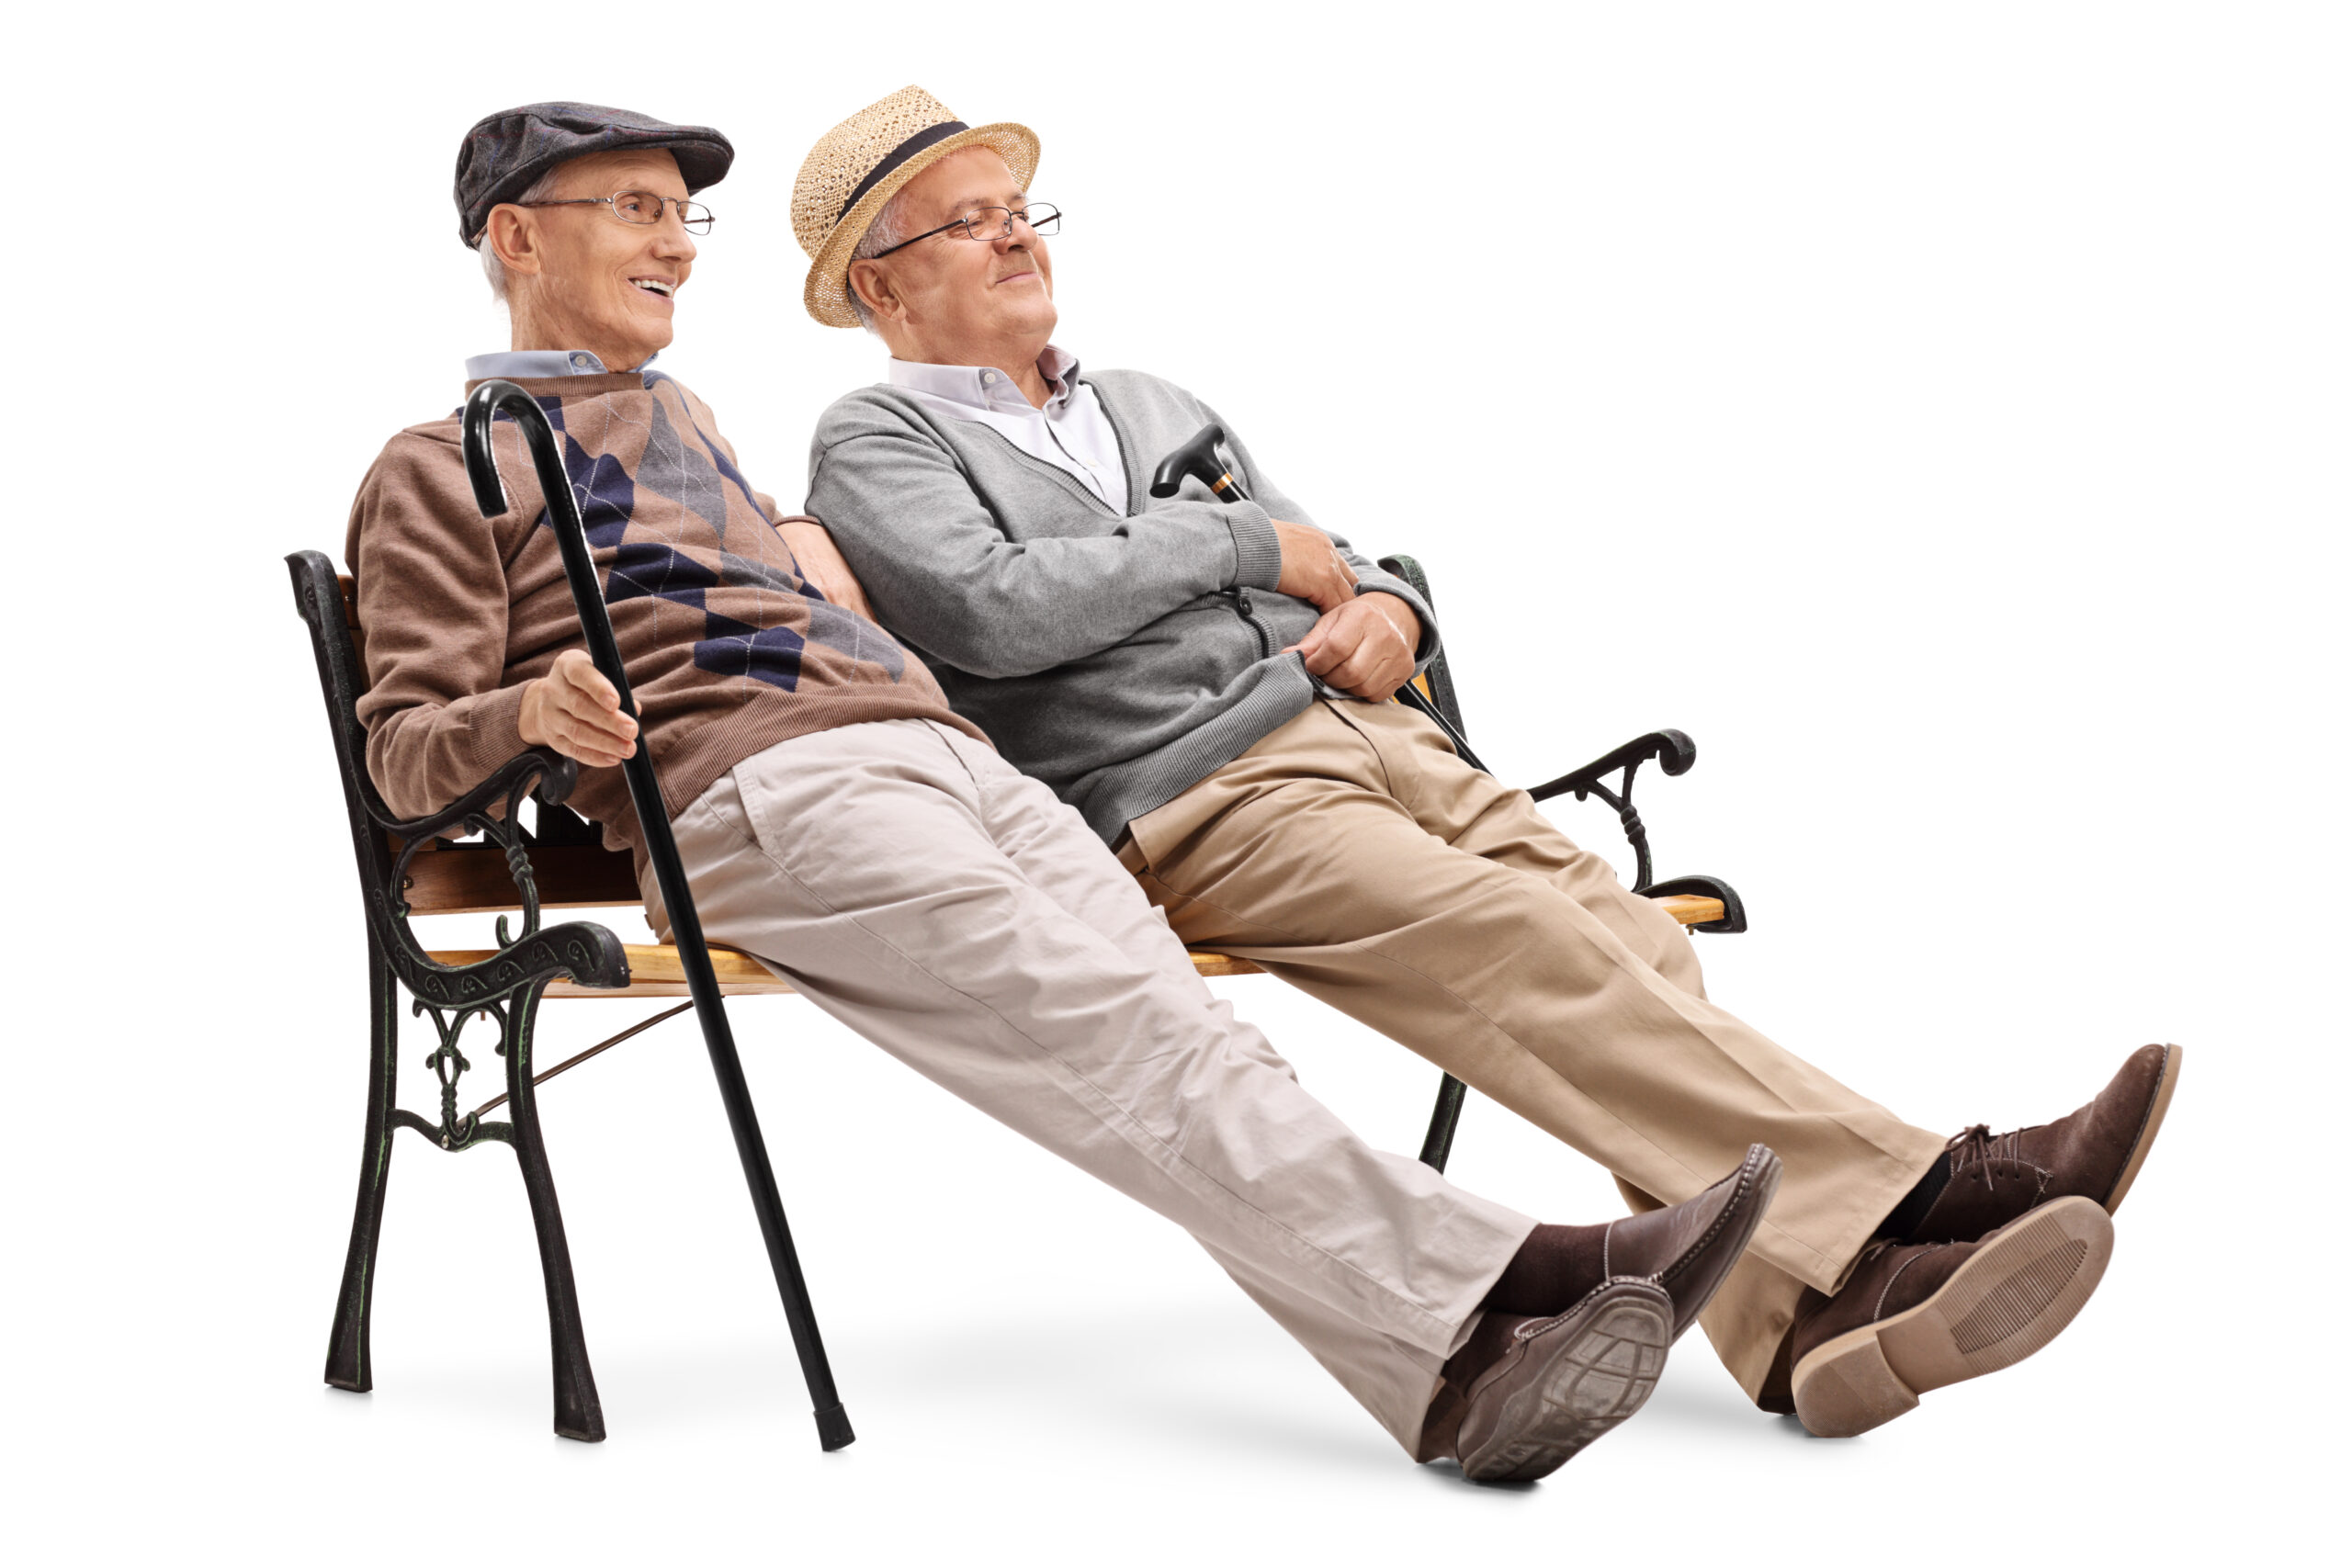 Two older gentlemen relaxing on an outside bench